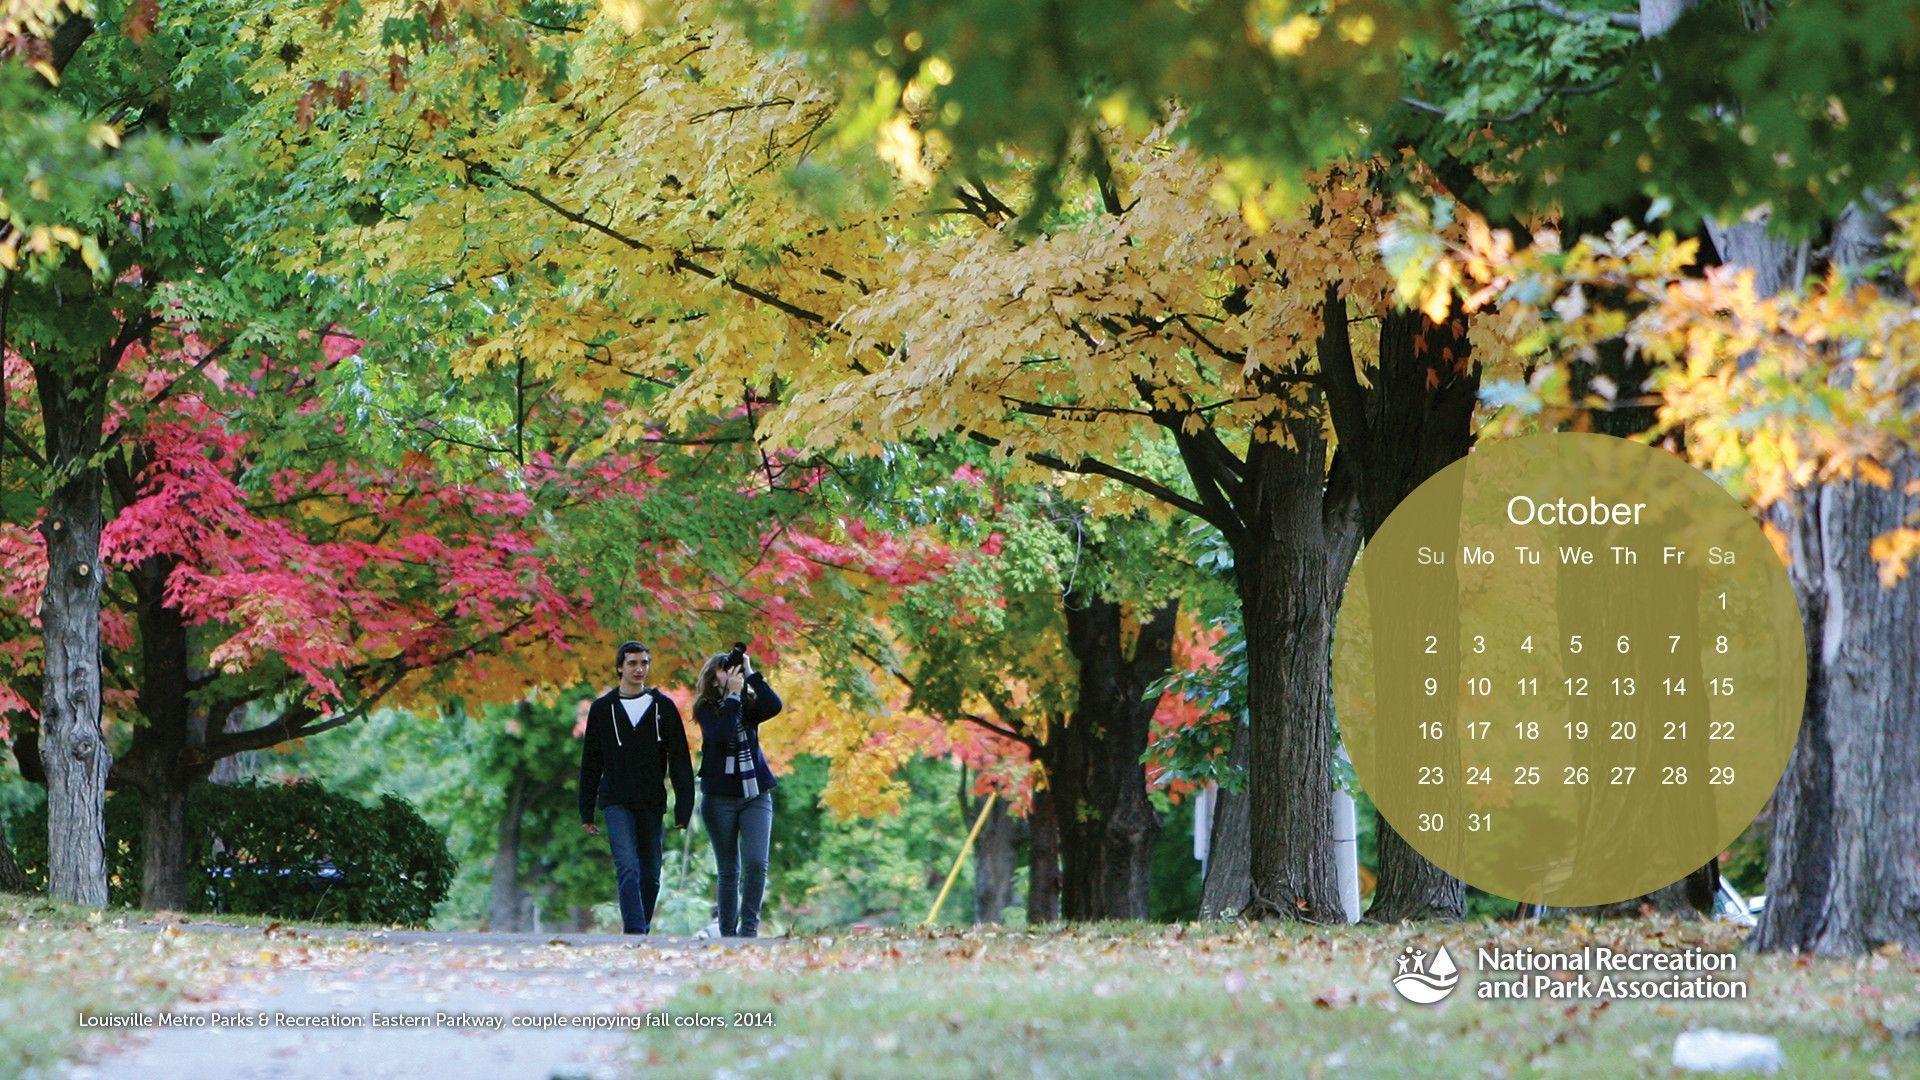 Premier Member Calendar. National Recreation and Park Association